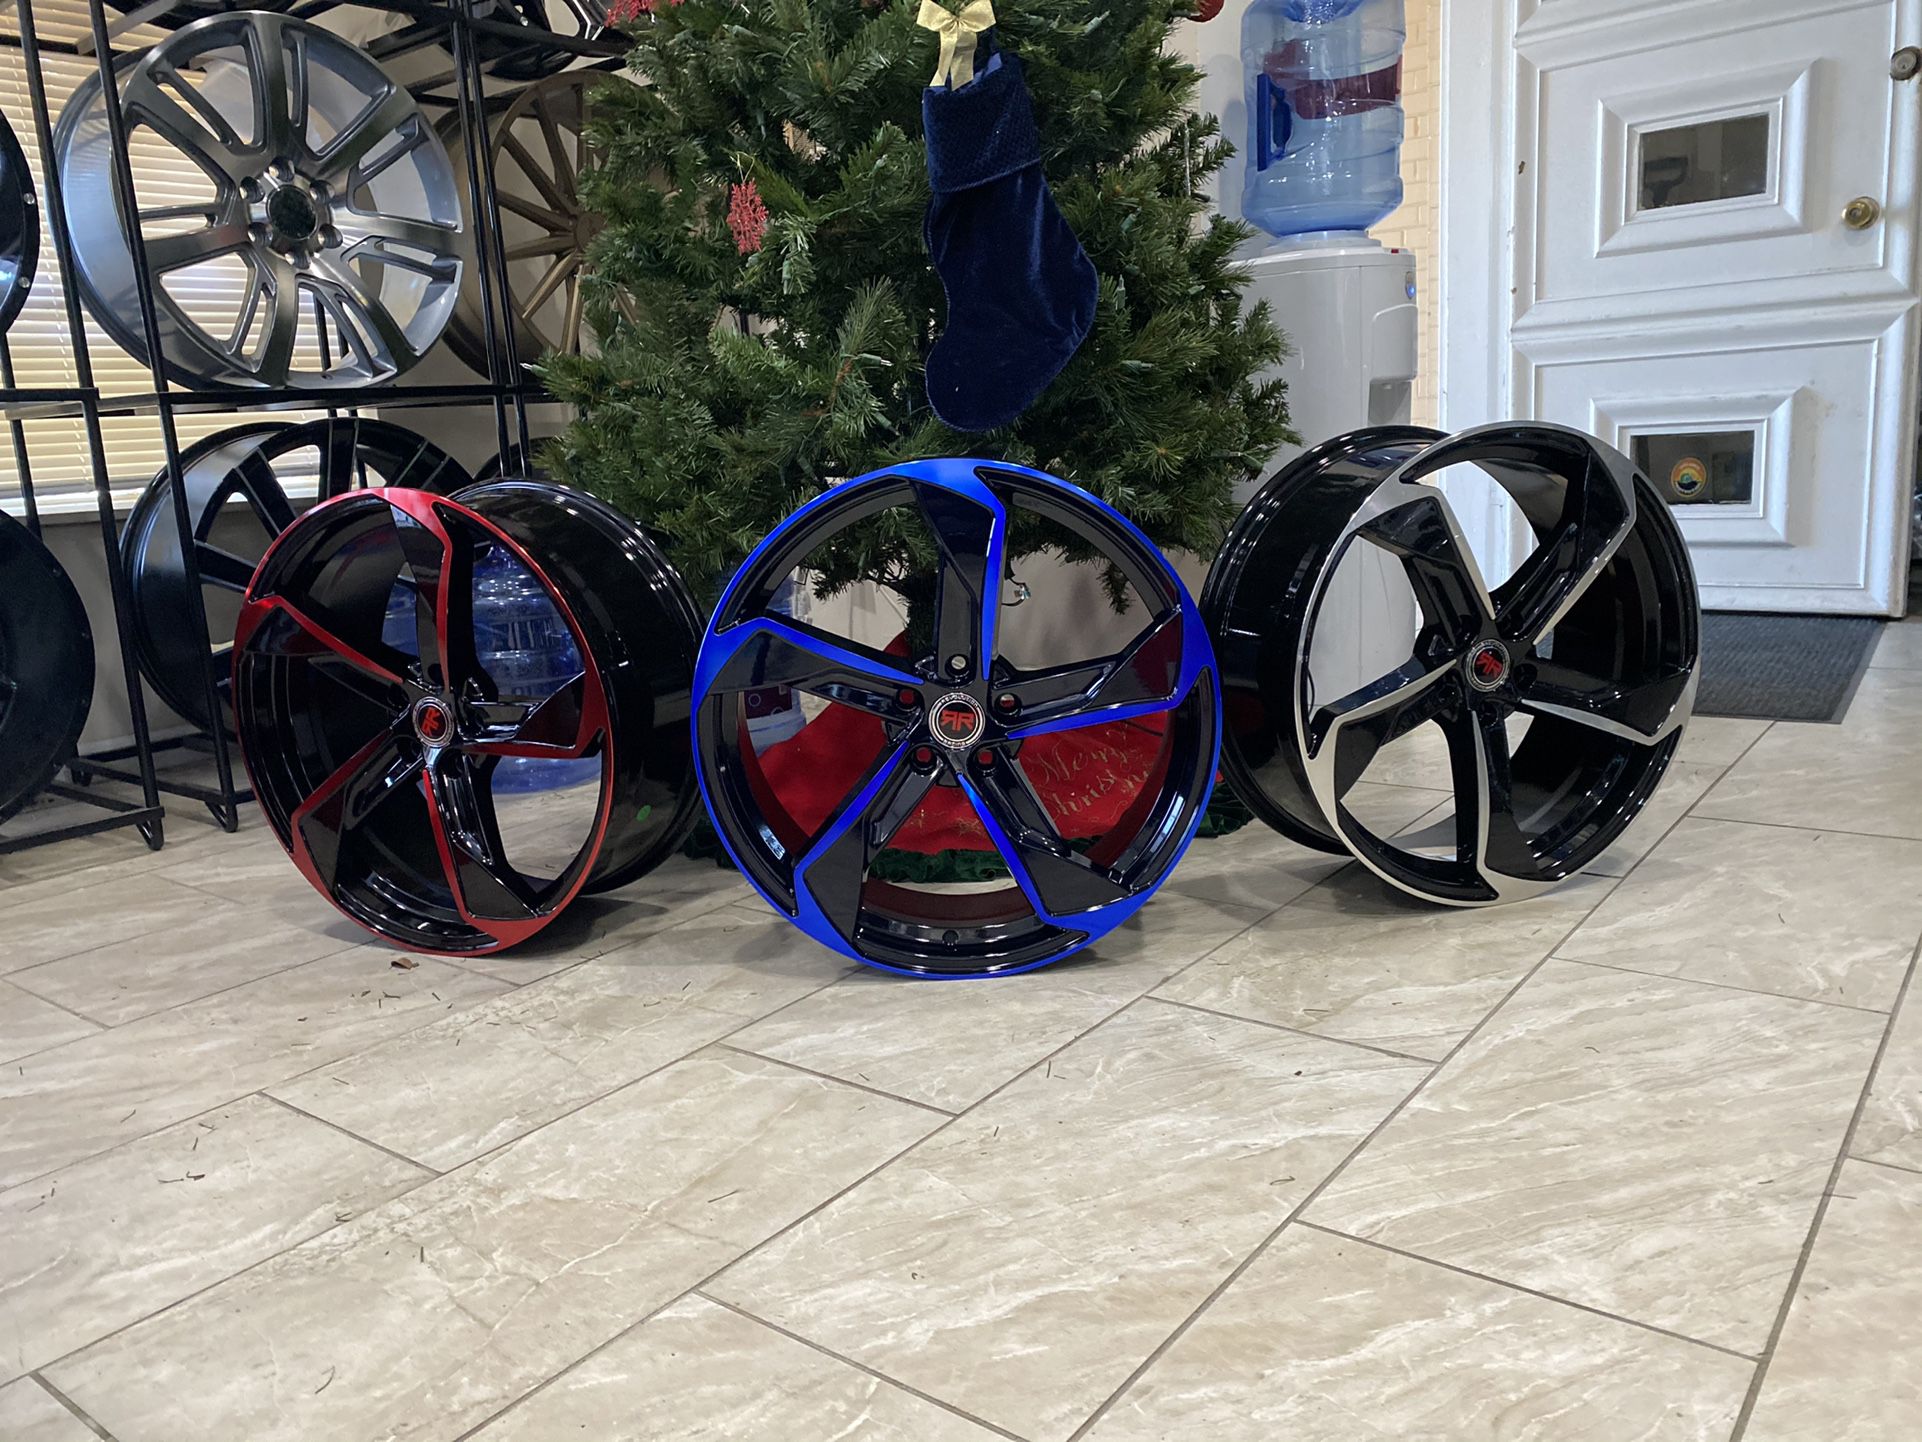 Revolution Wheels